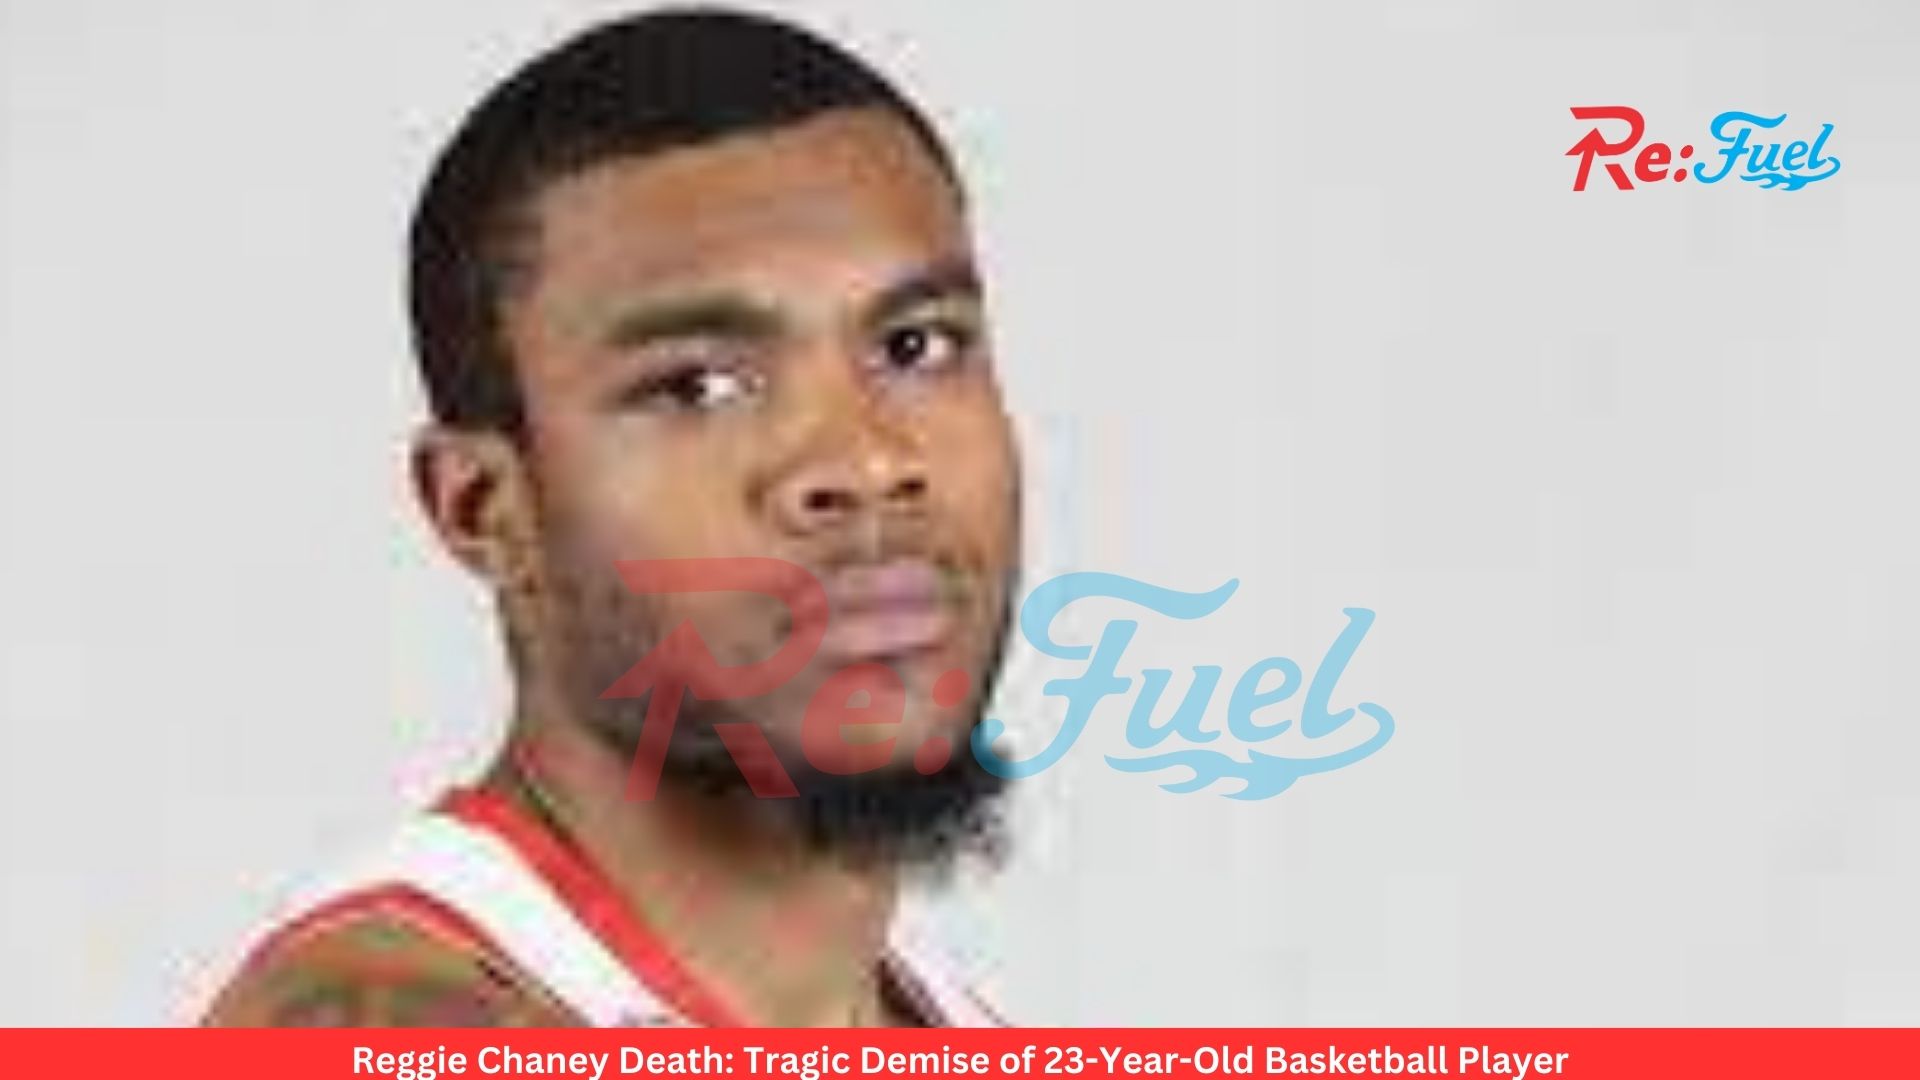 Reggie Chaney Death: Tragic Demise of 23-Year-Old Basketball Player